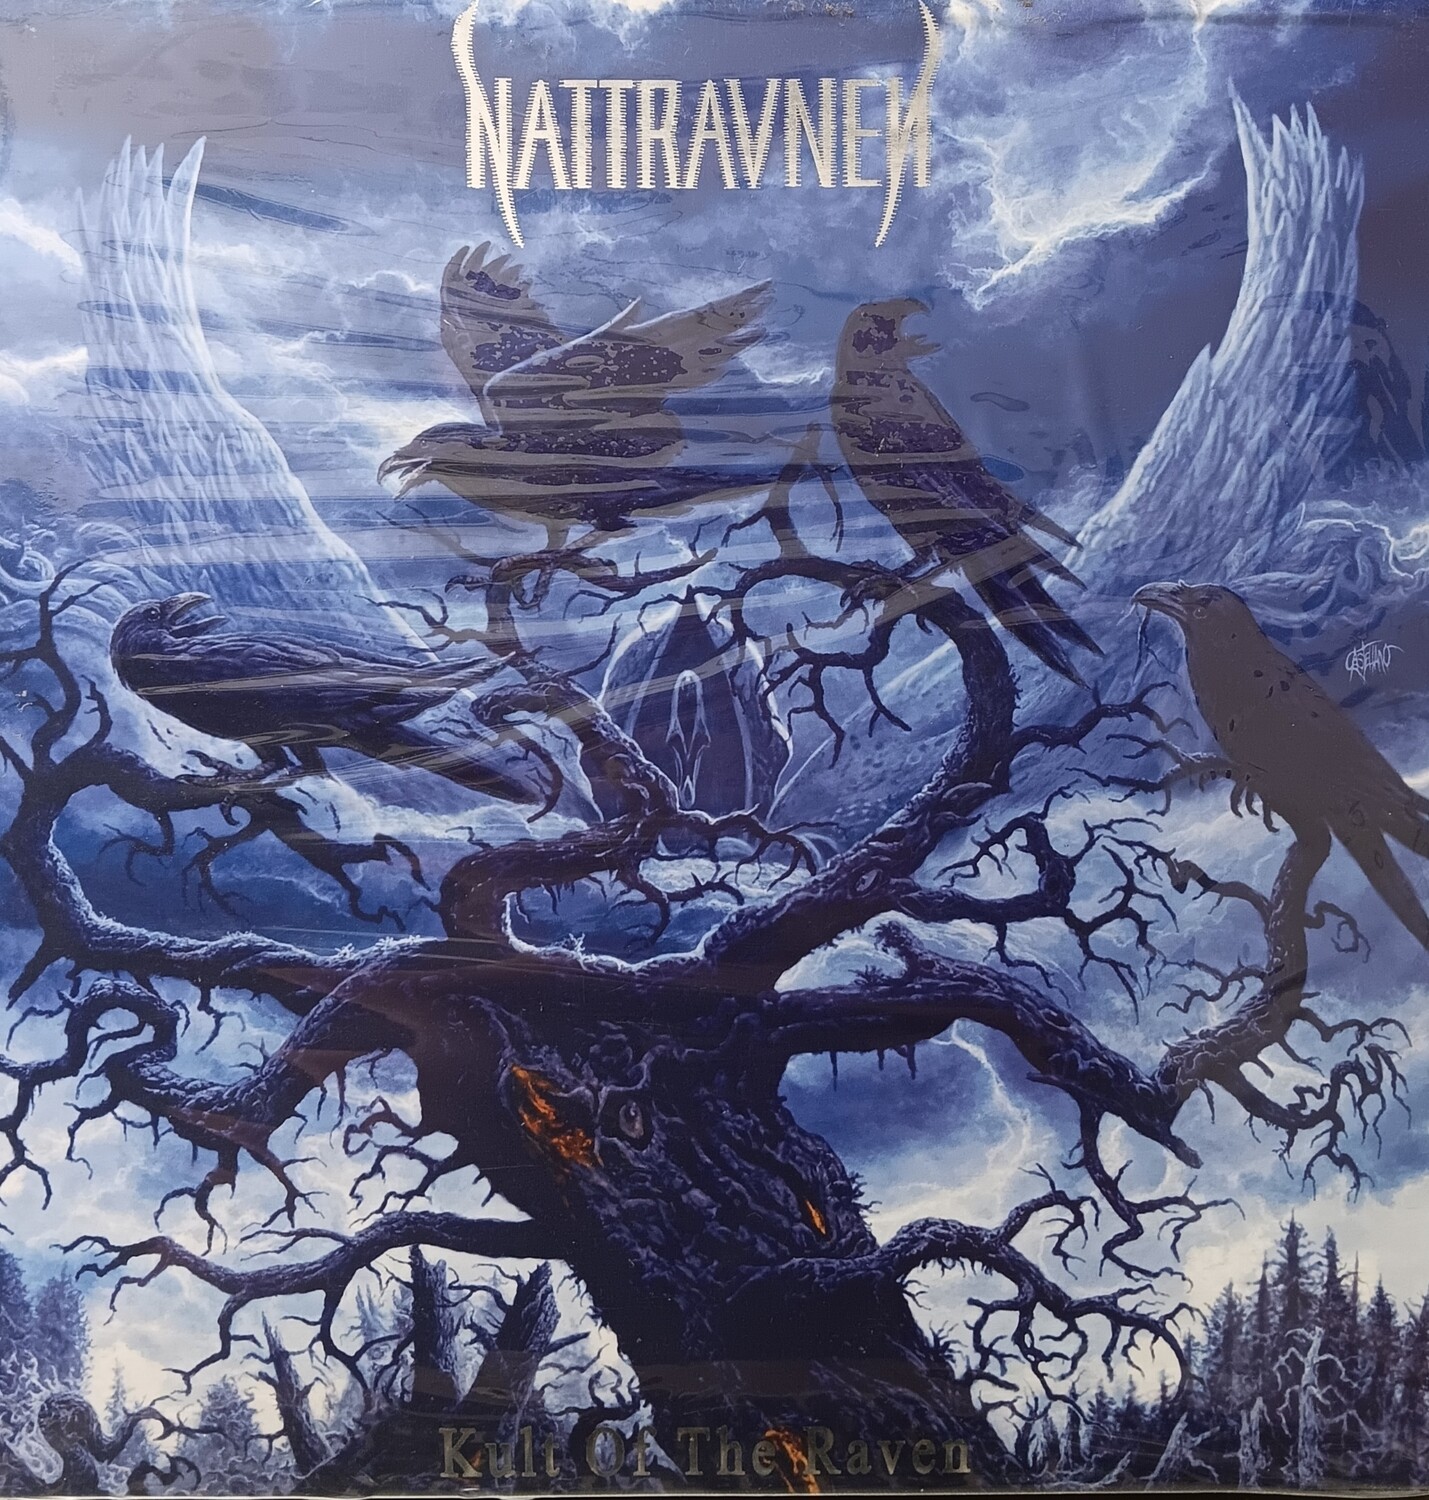 NATTRAVNEN - Kult of the raven (BOXSET LP)